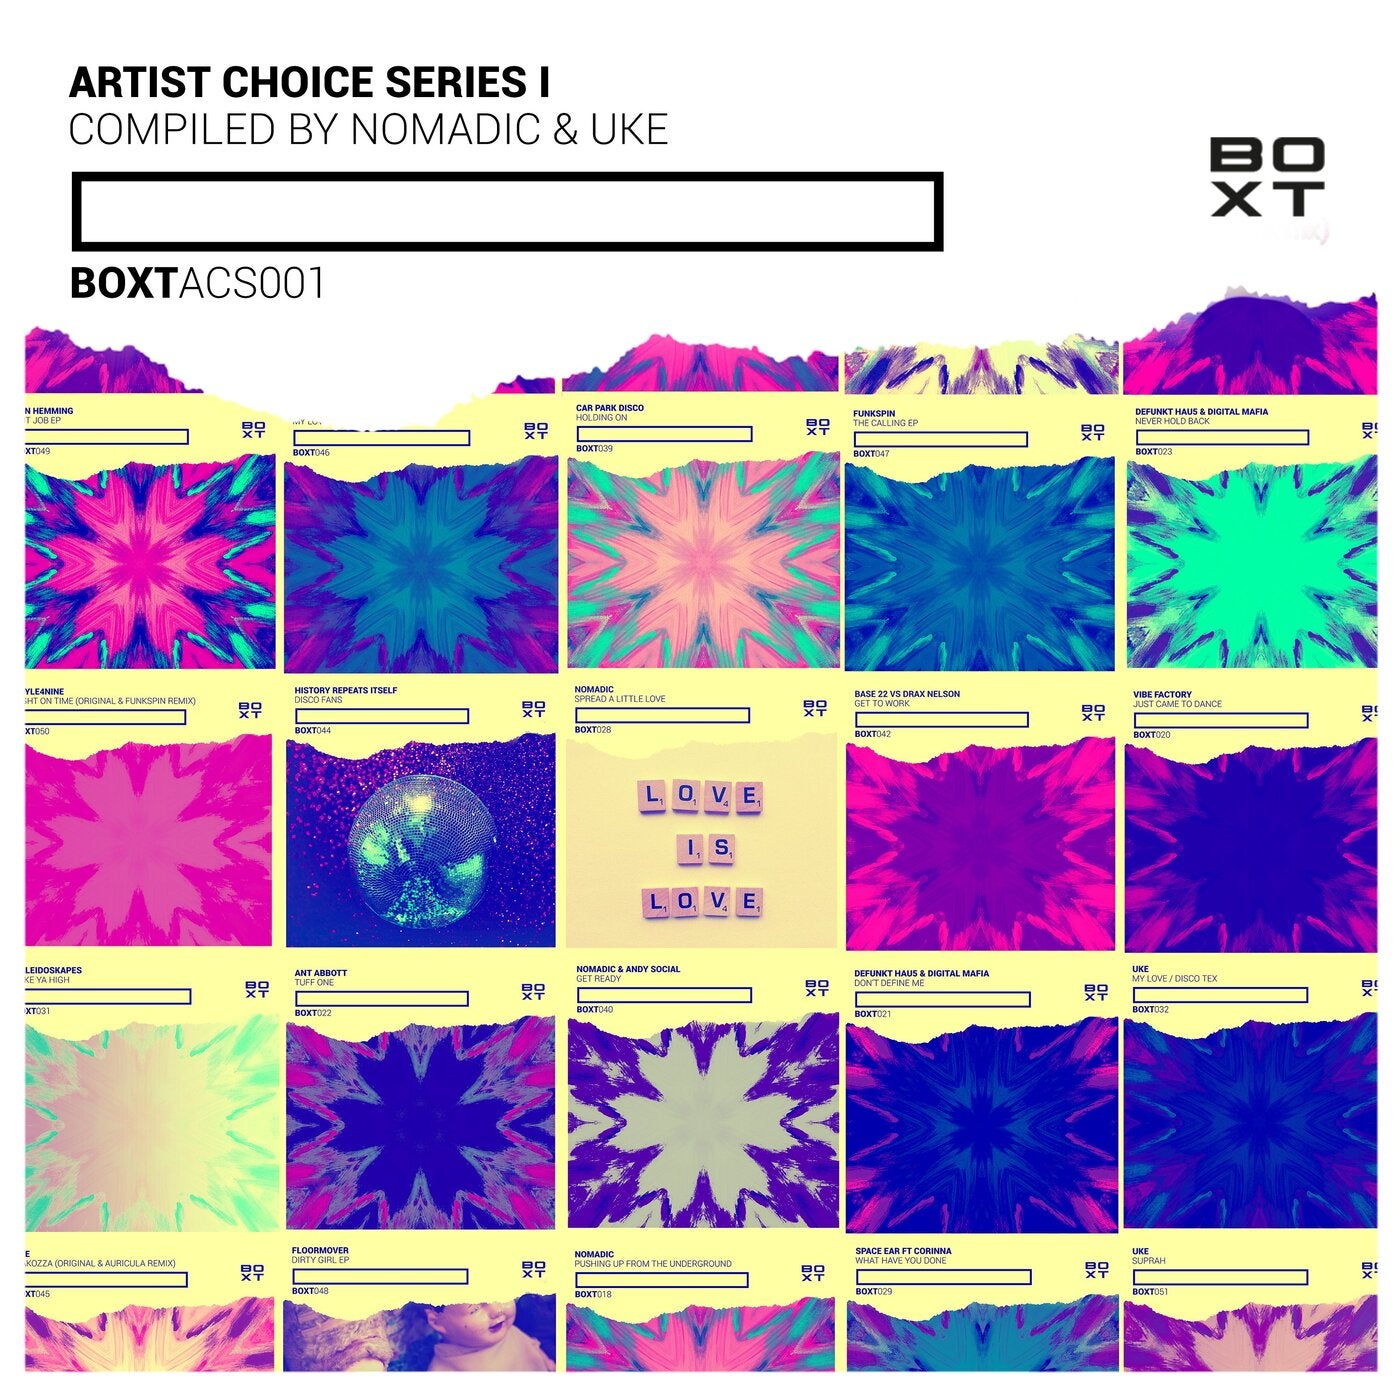 Artists Choice Series I